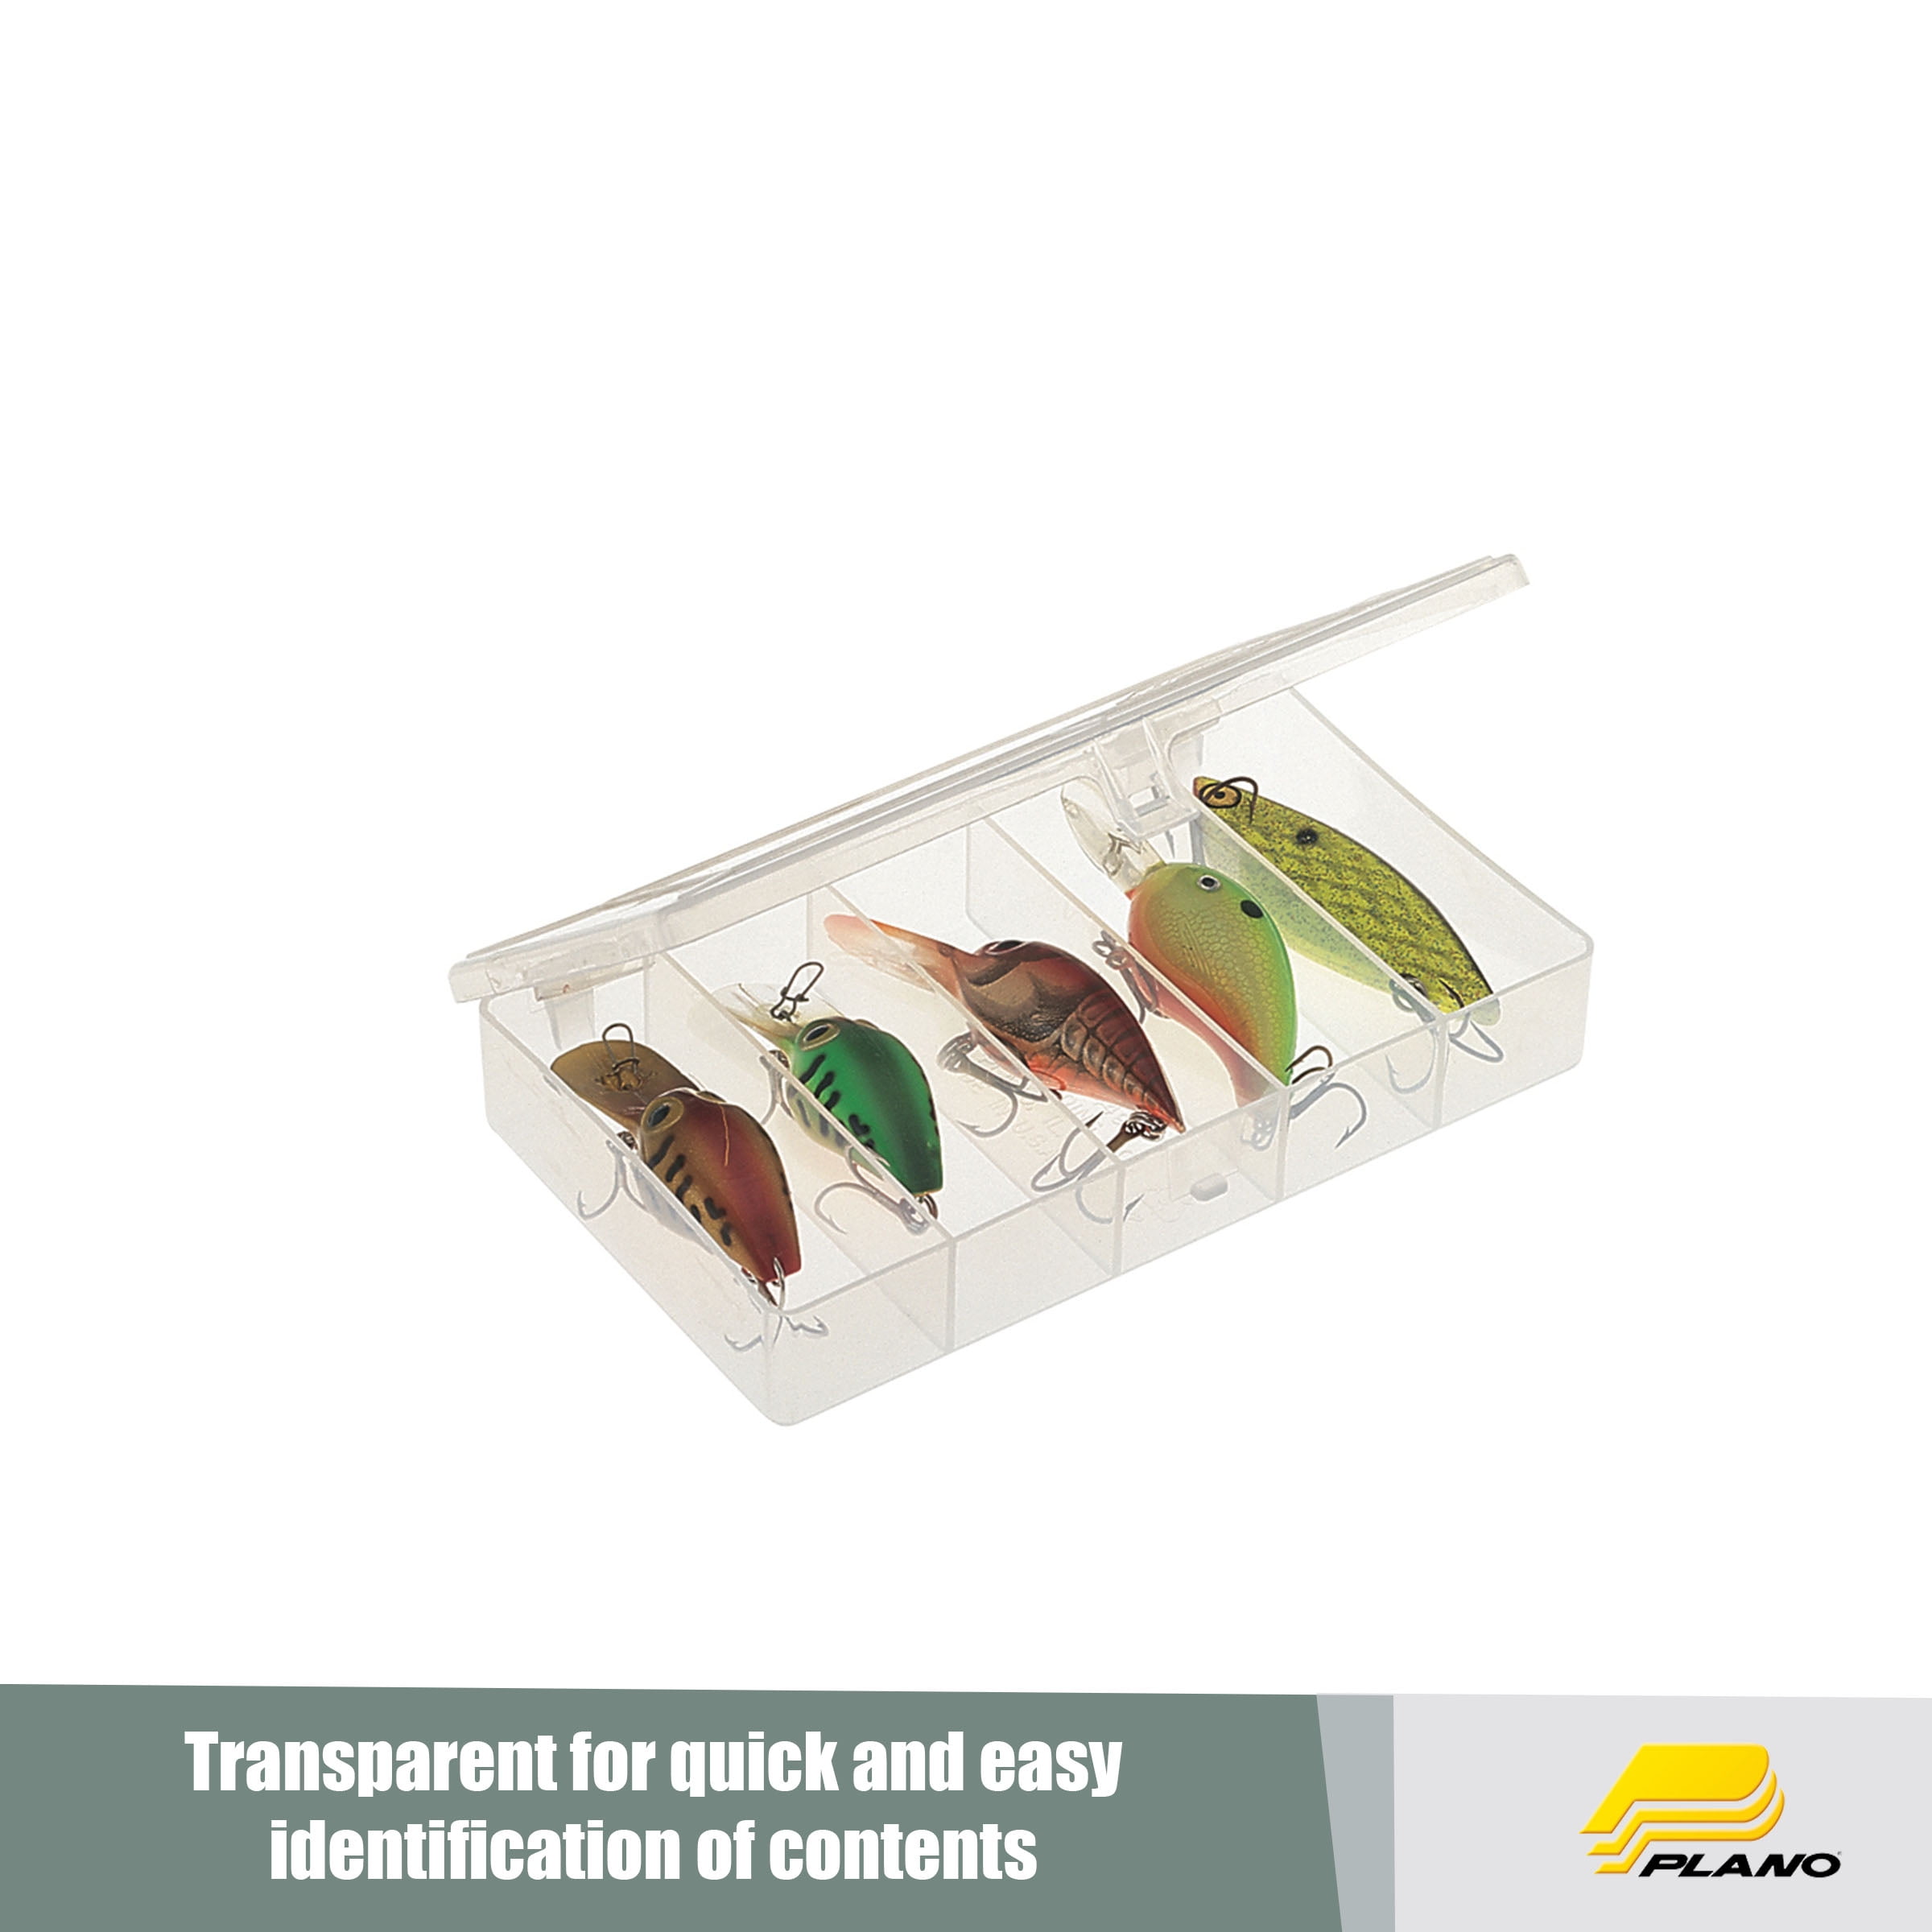 Plano Synergy Stowaway Compact Fishing Tackle Box, Multi